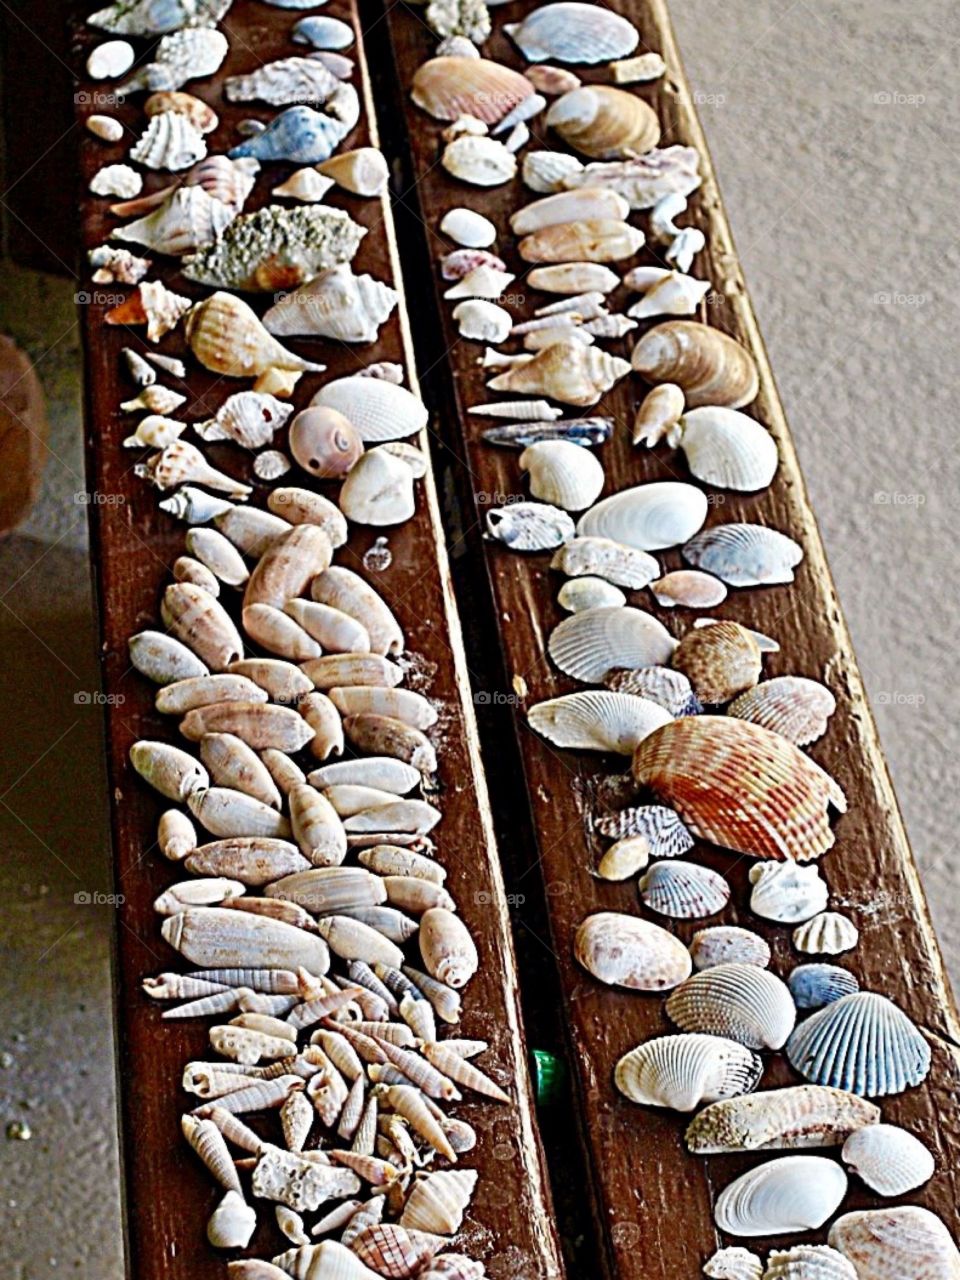 Collecting seashells 